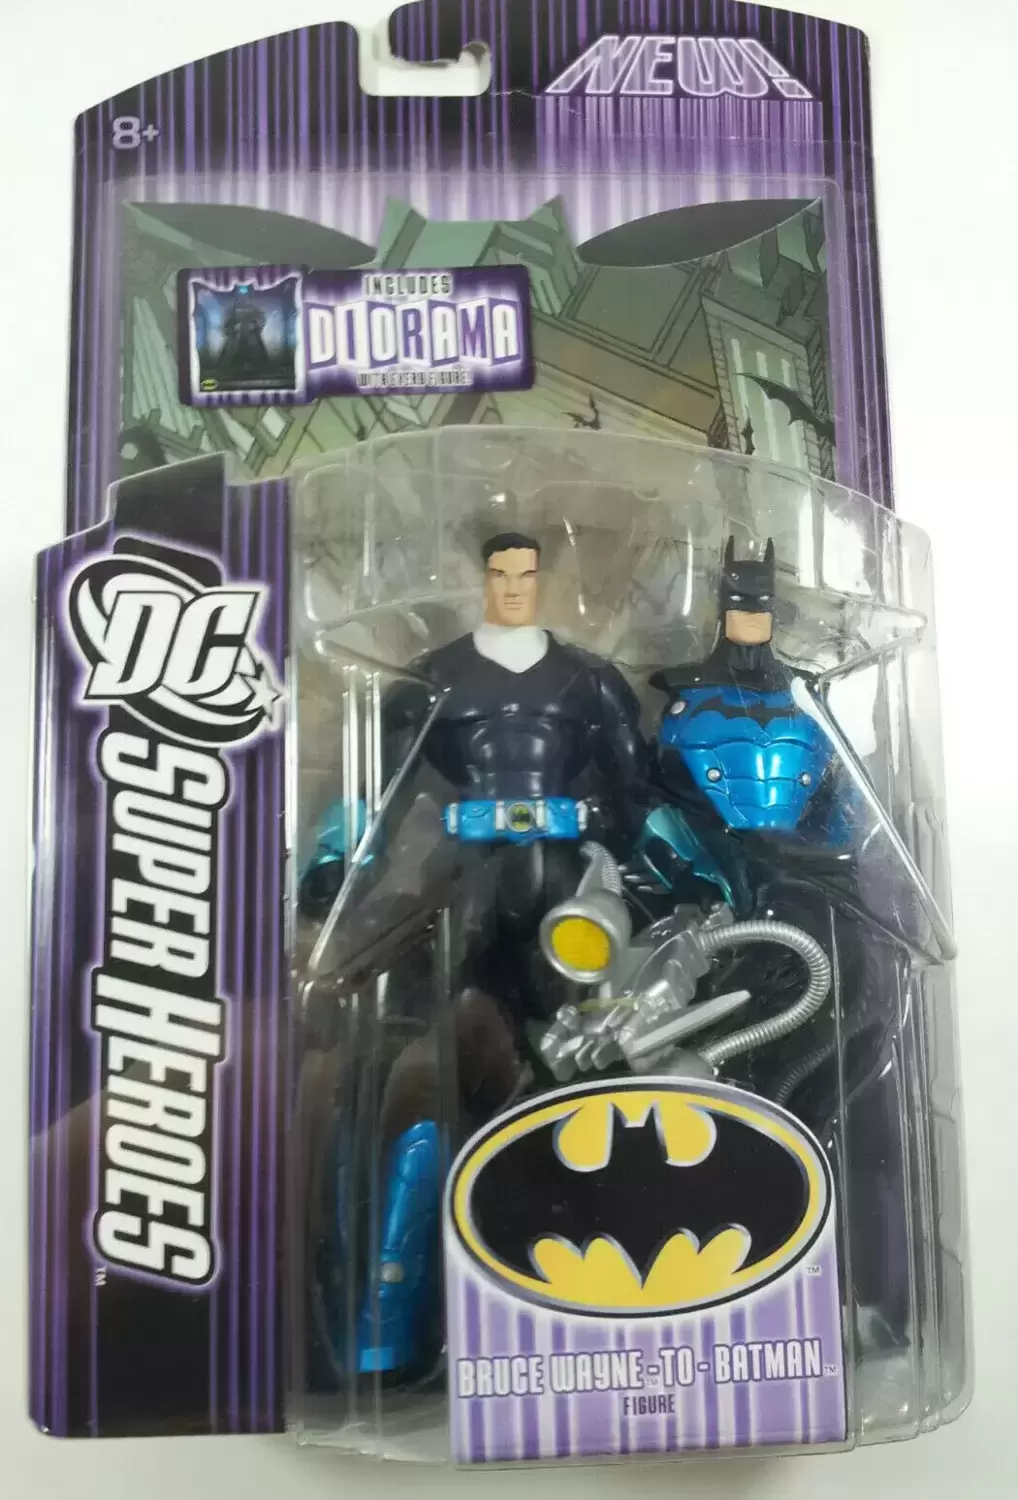 DC Super Heroes - Bruce Wayne -To- Batman